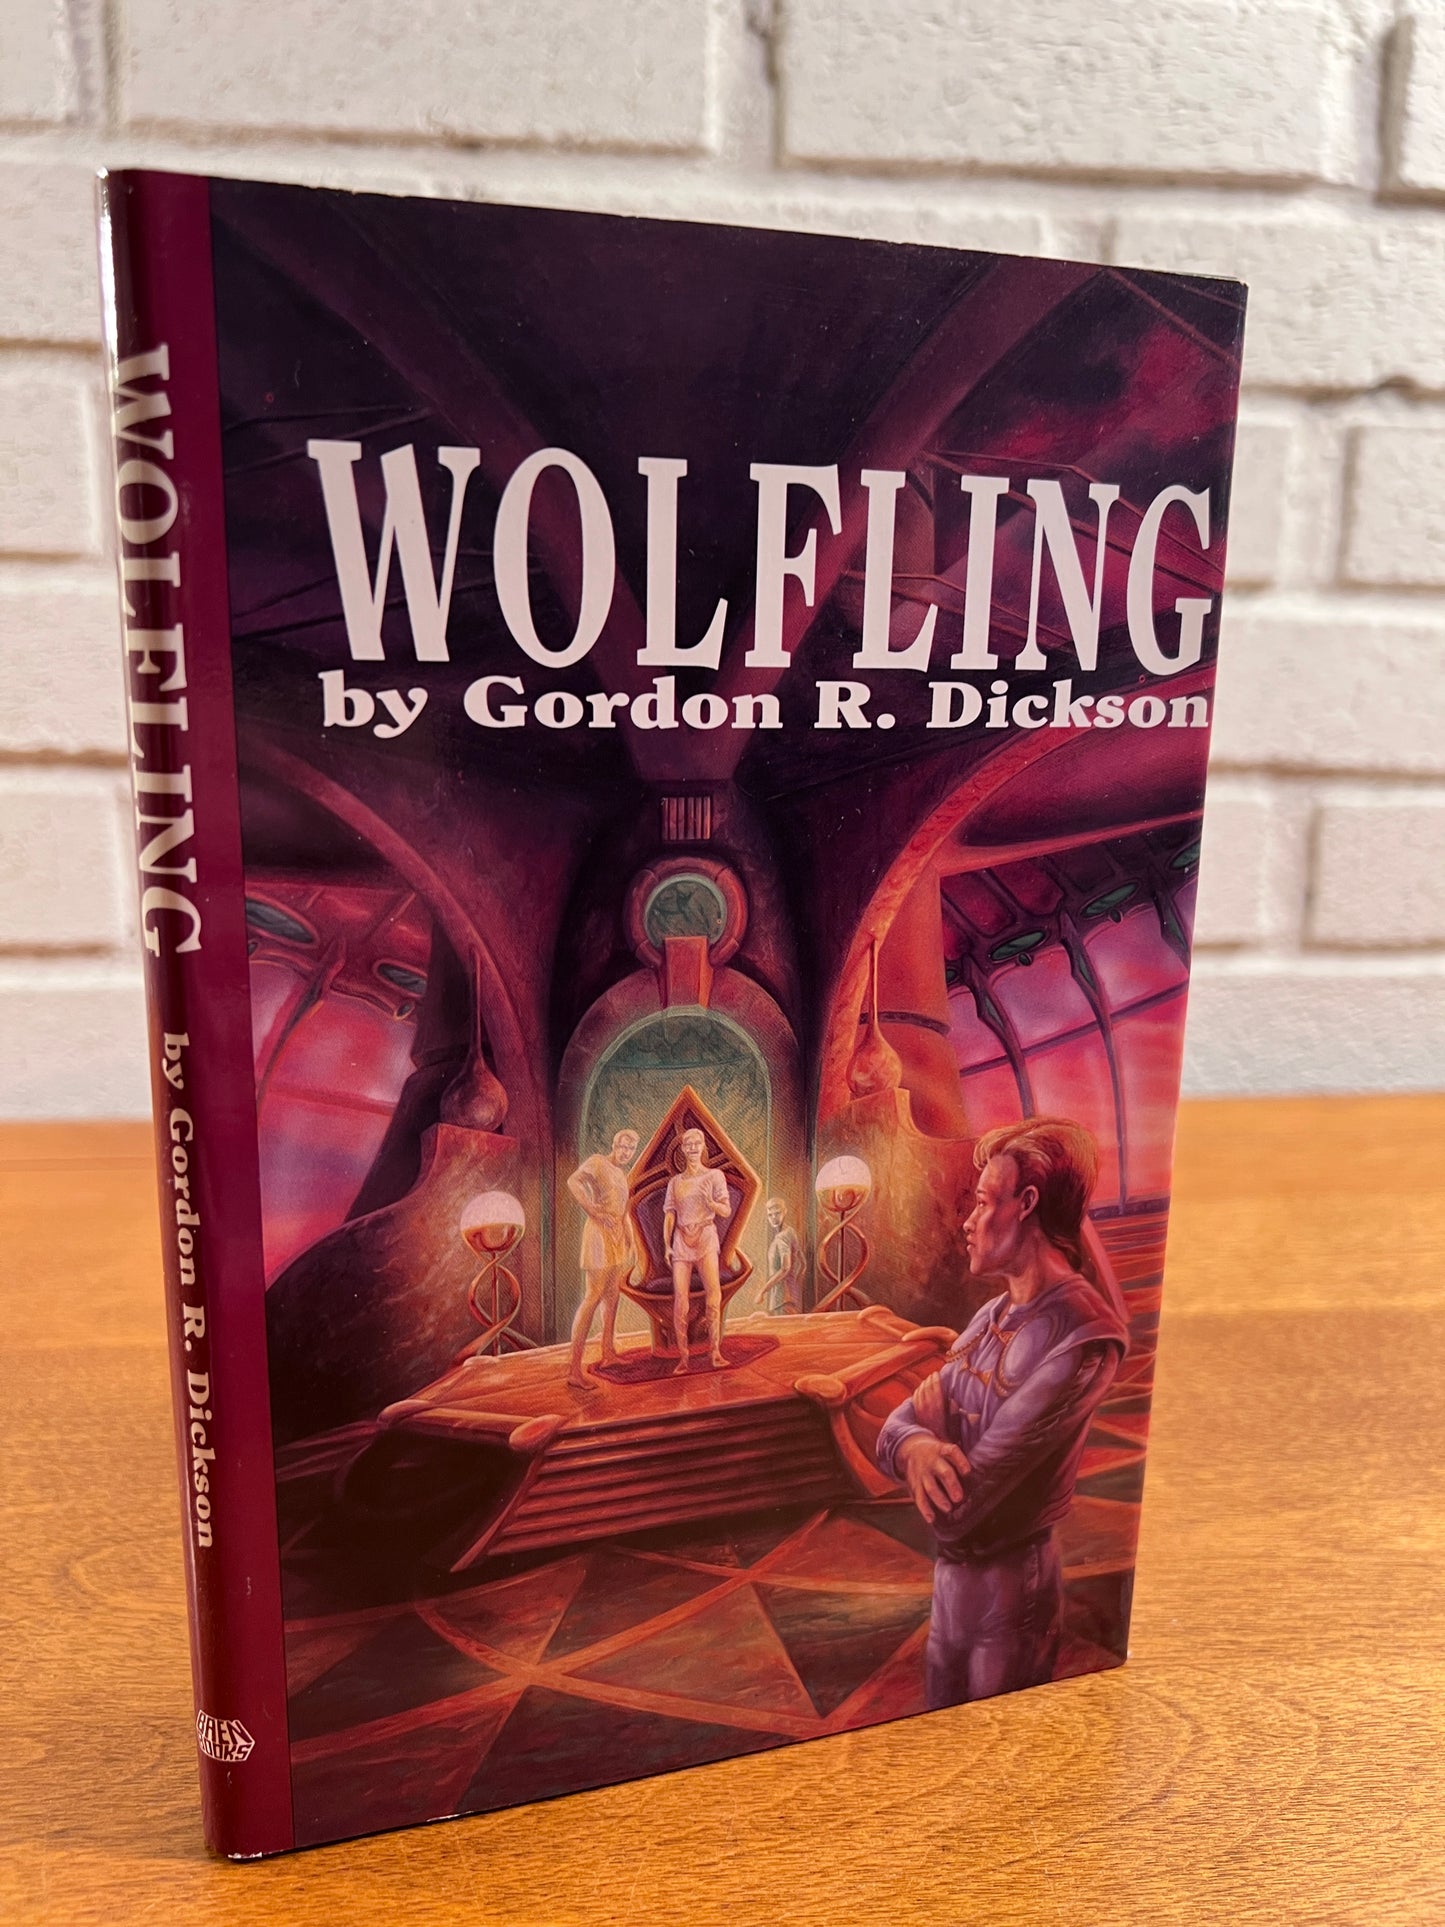 Wolfling by Gordon R. Dickson